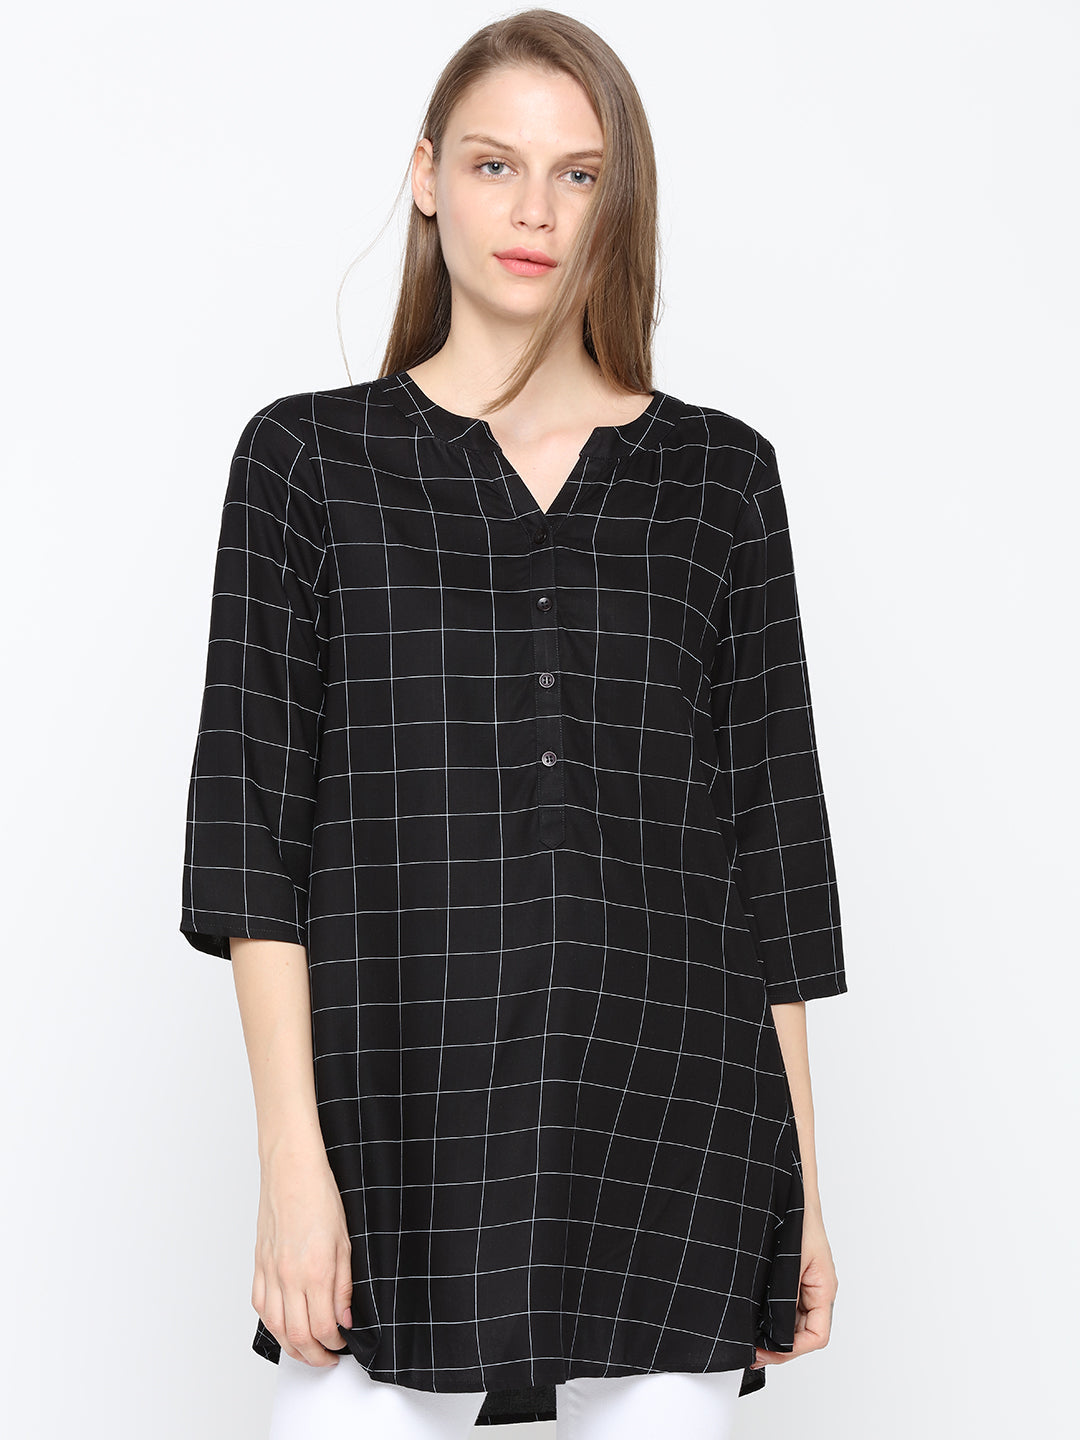 Checkered black tunic